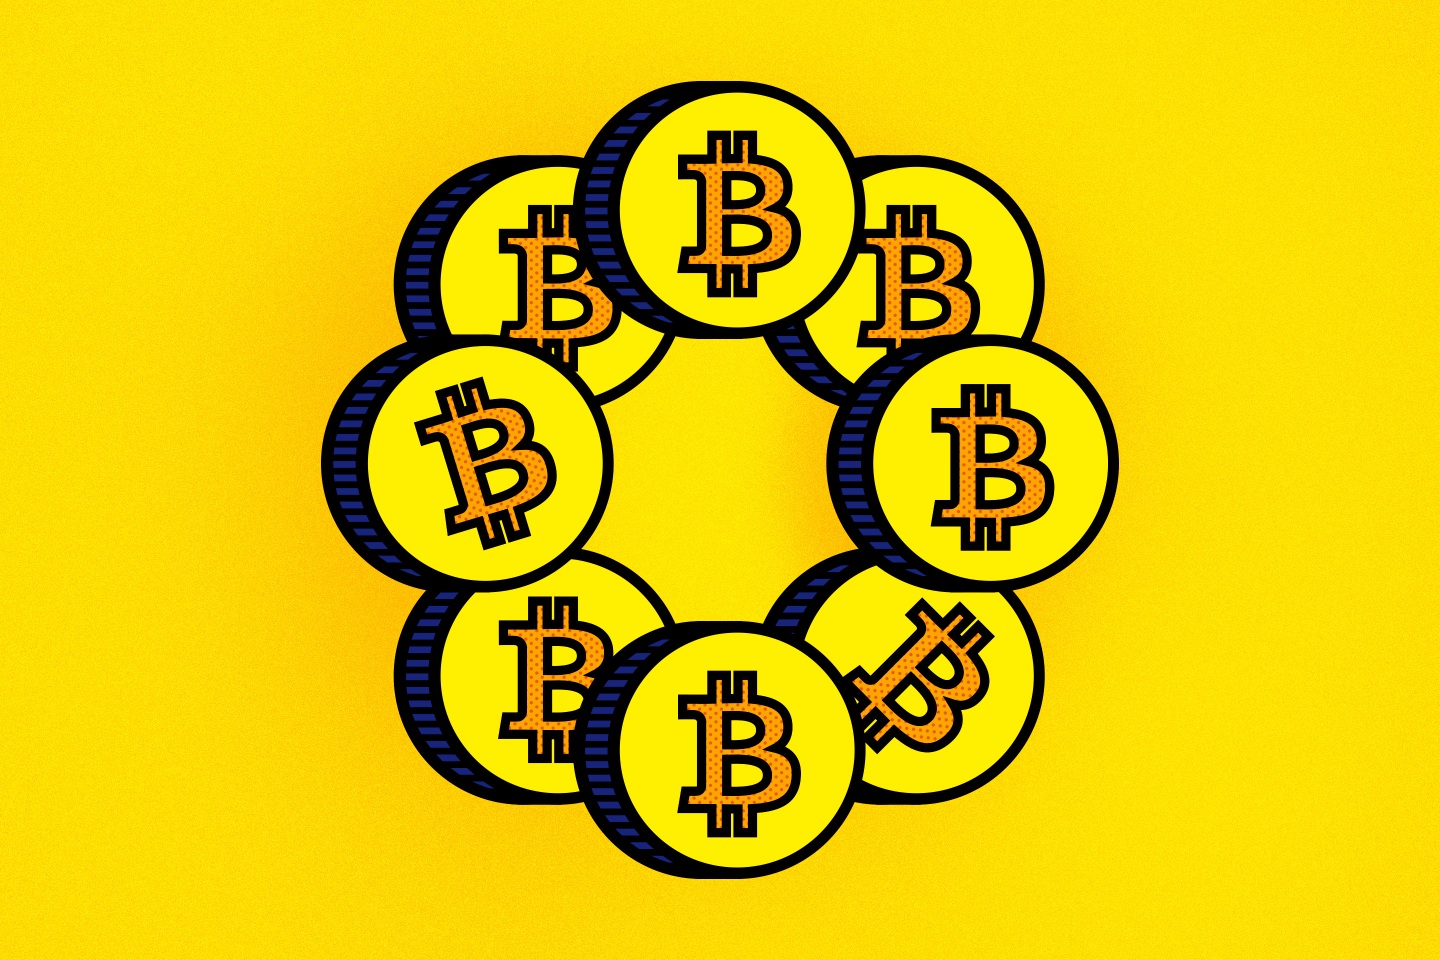 A circle of coins, each with the Bitcoin logo